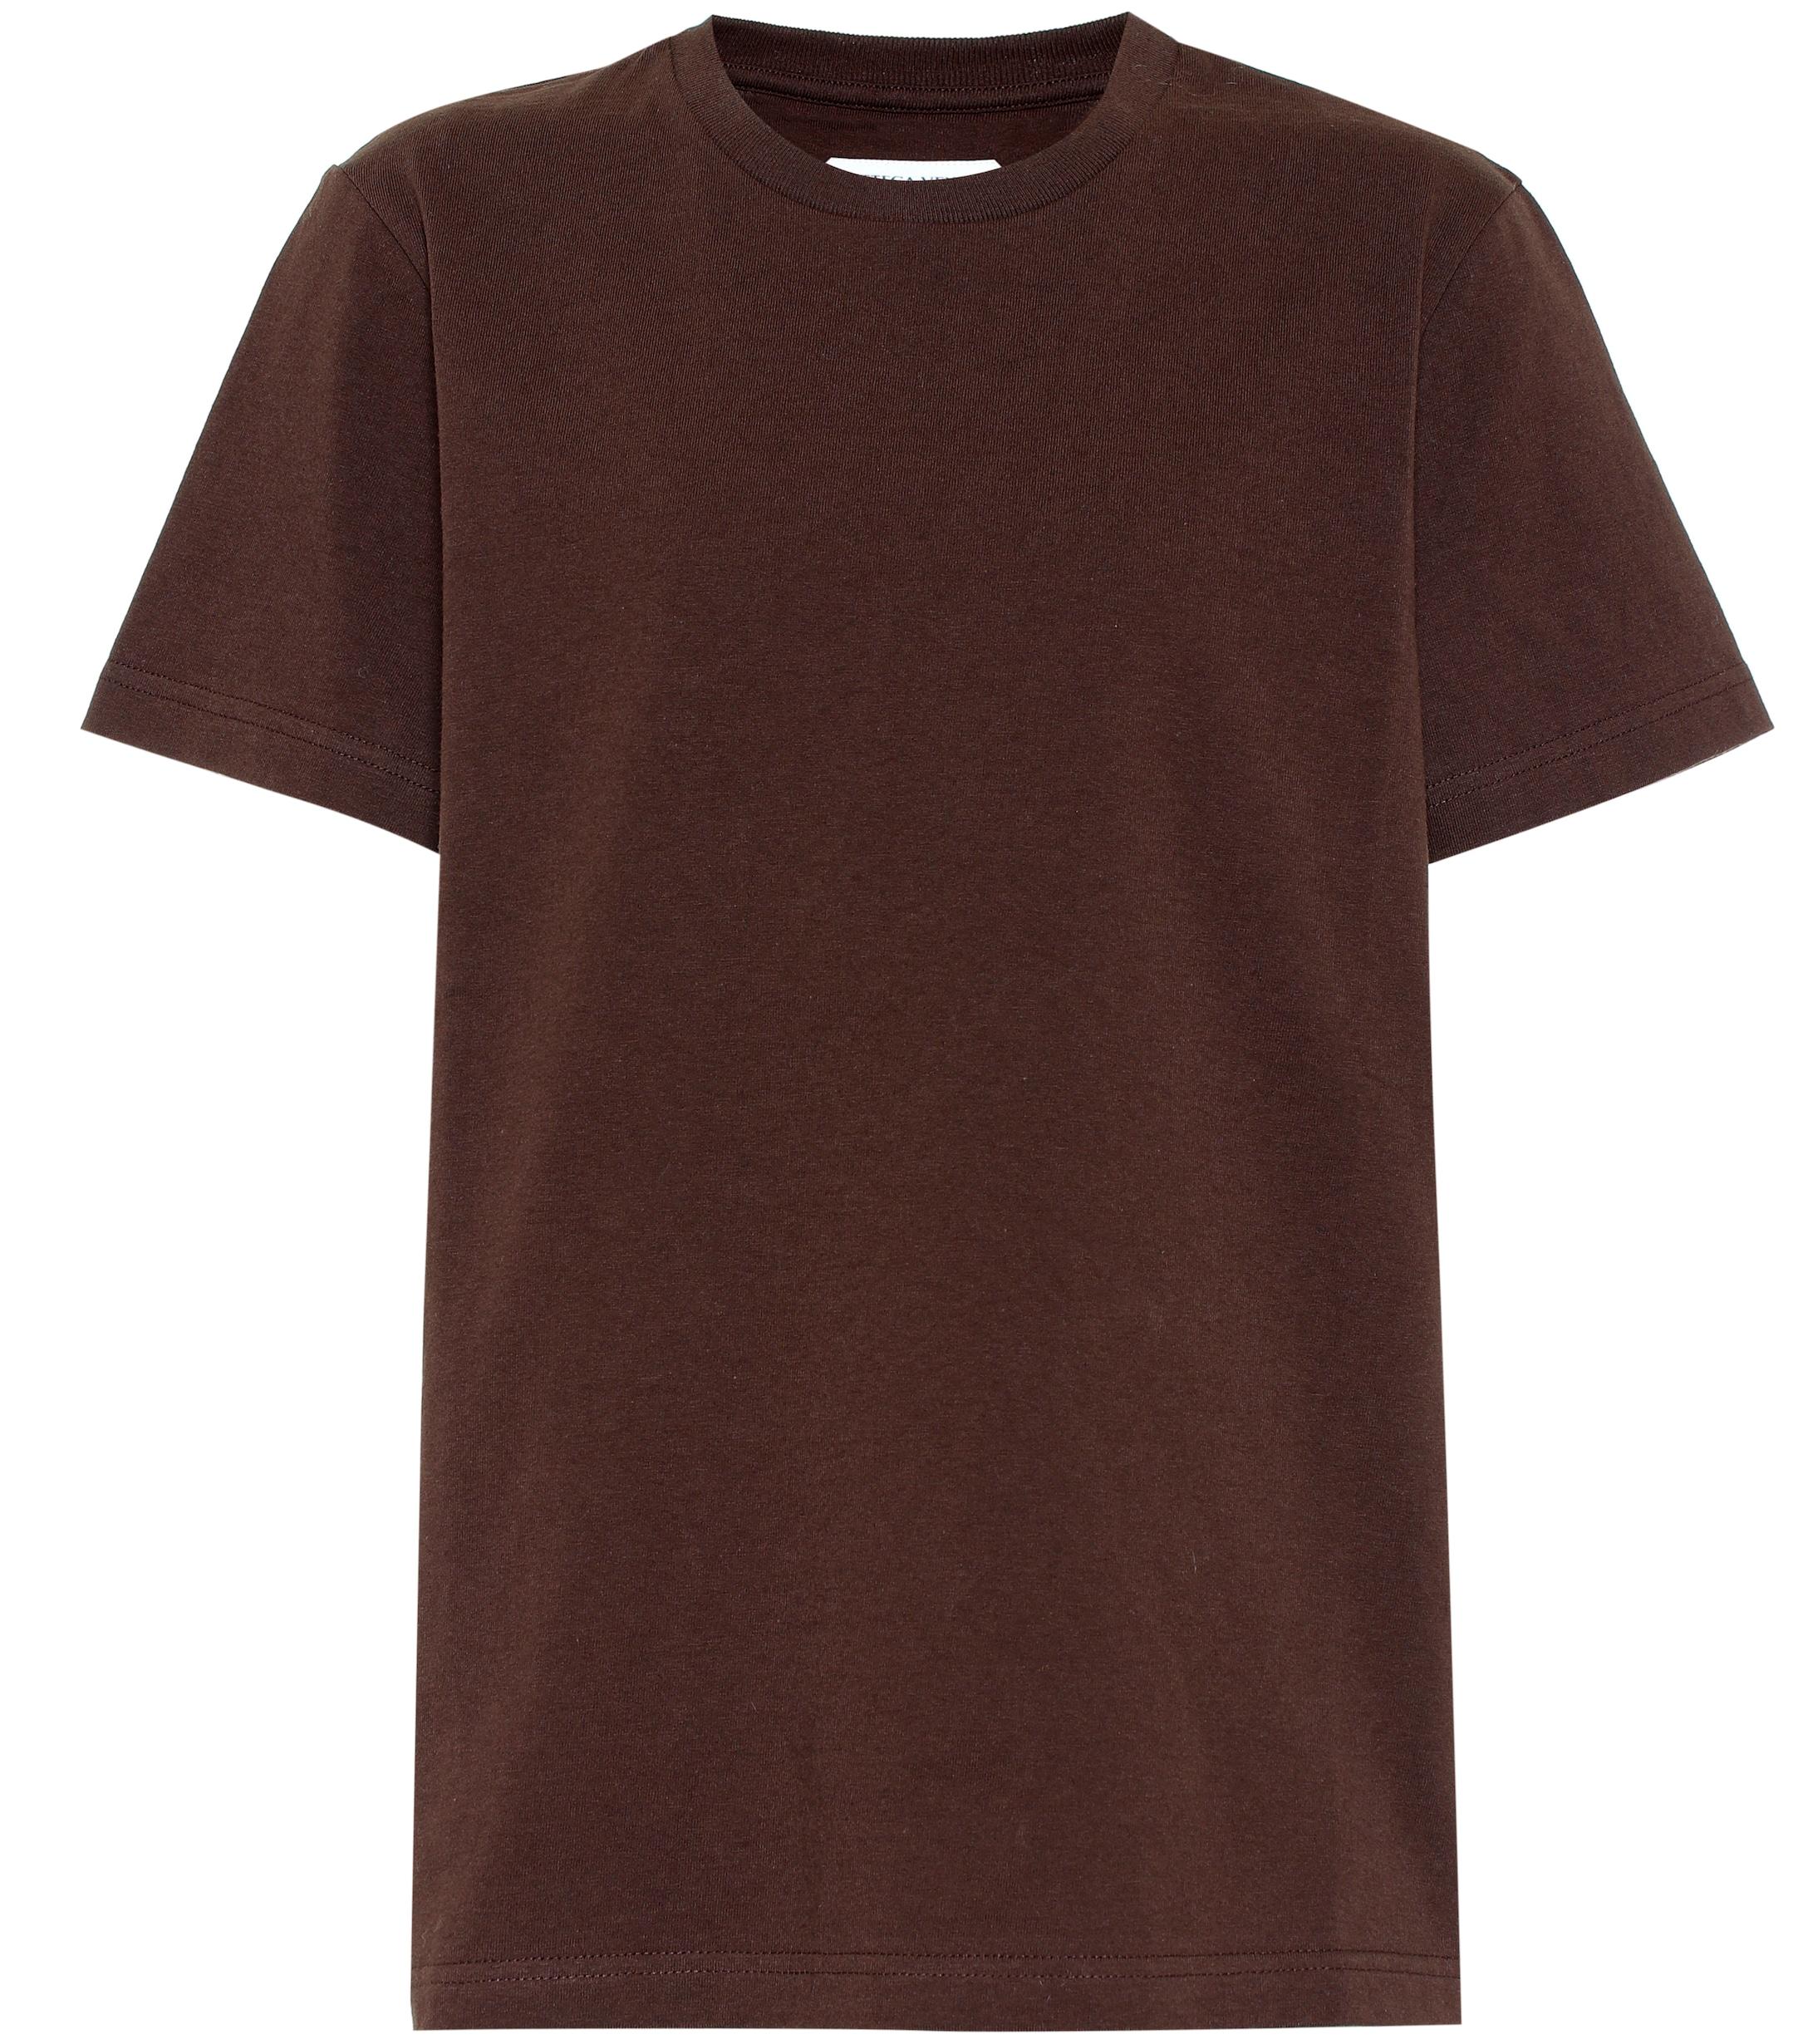 Bottega Veneta Cotton T-shirt in Brown - Lyst